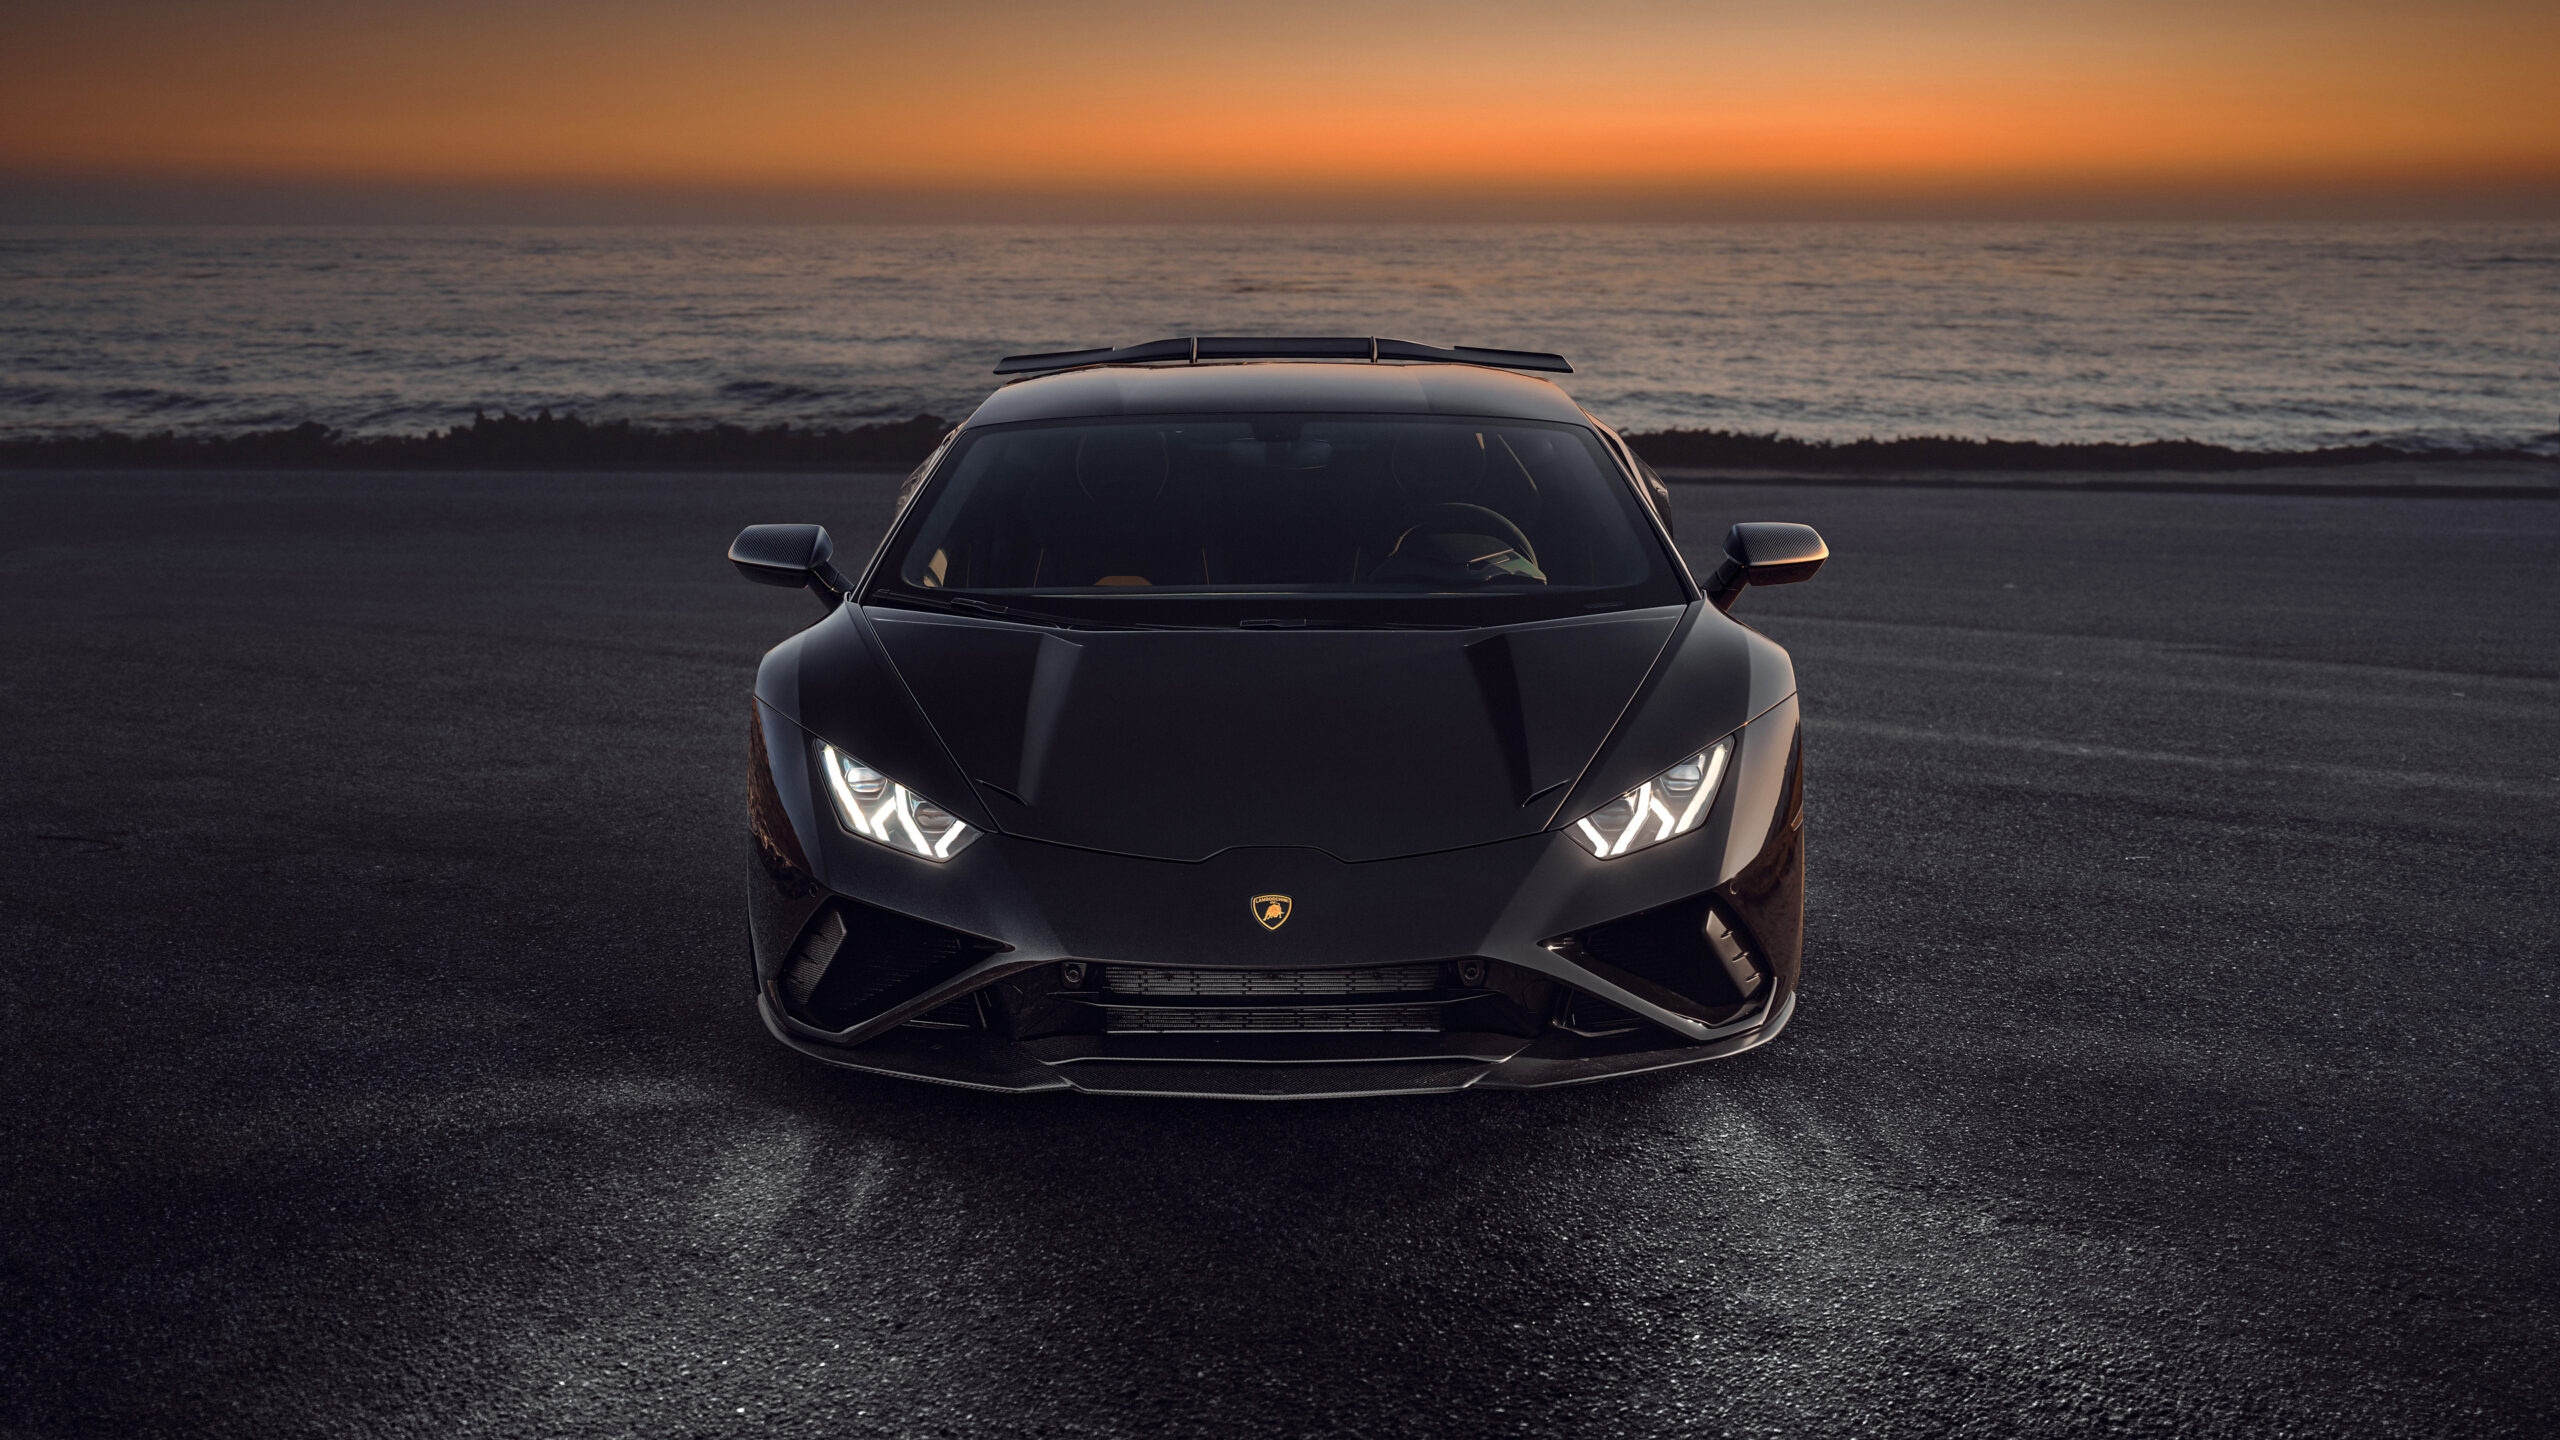 Lamborghini Huracan, Novitec edition, RWD wallpapers, Exclusive beauty, 2560x1440 HD Desktop